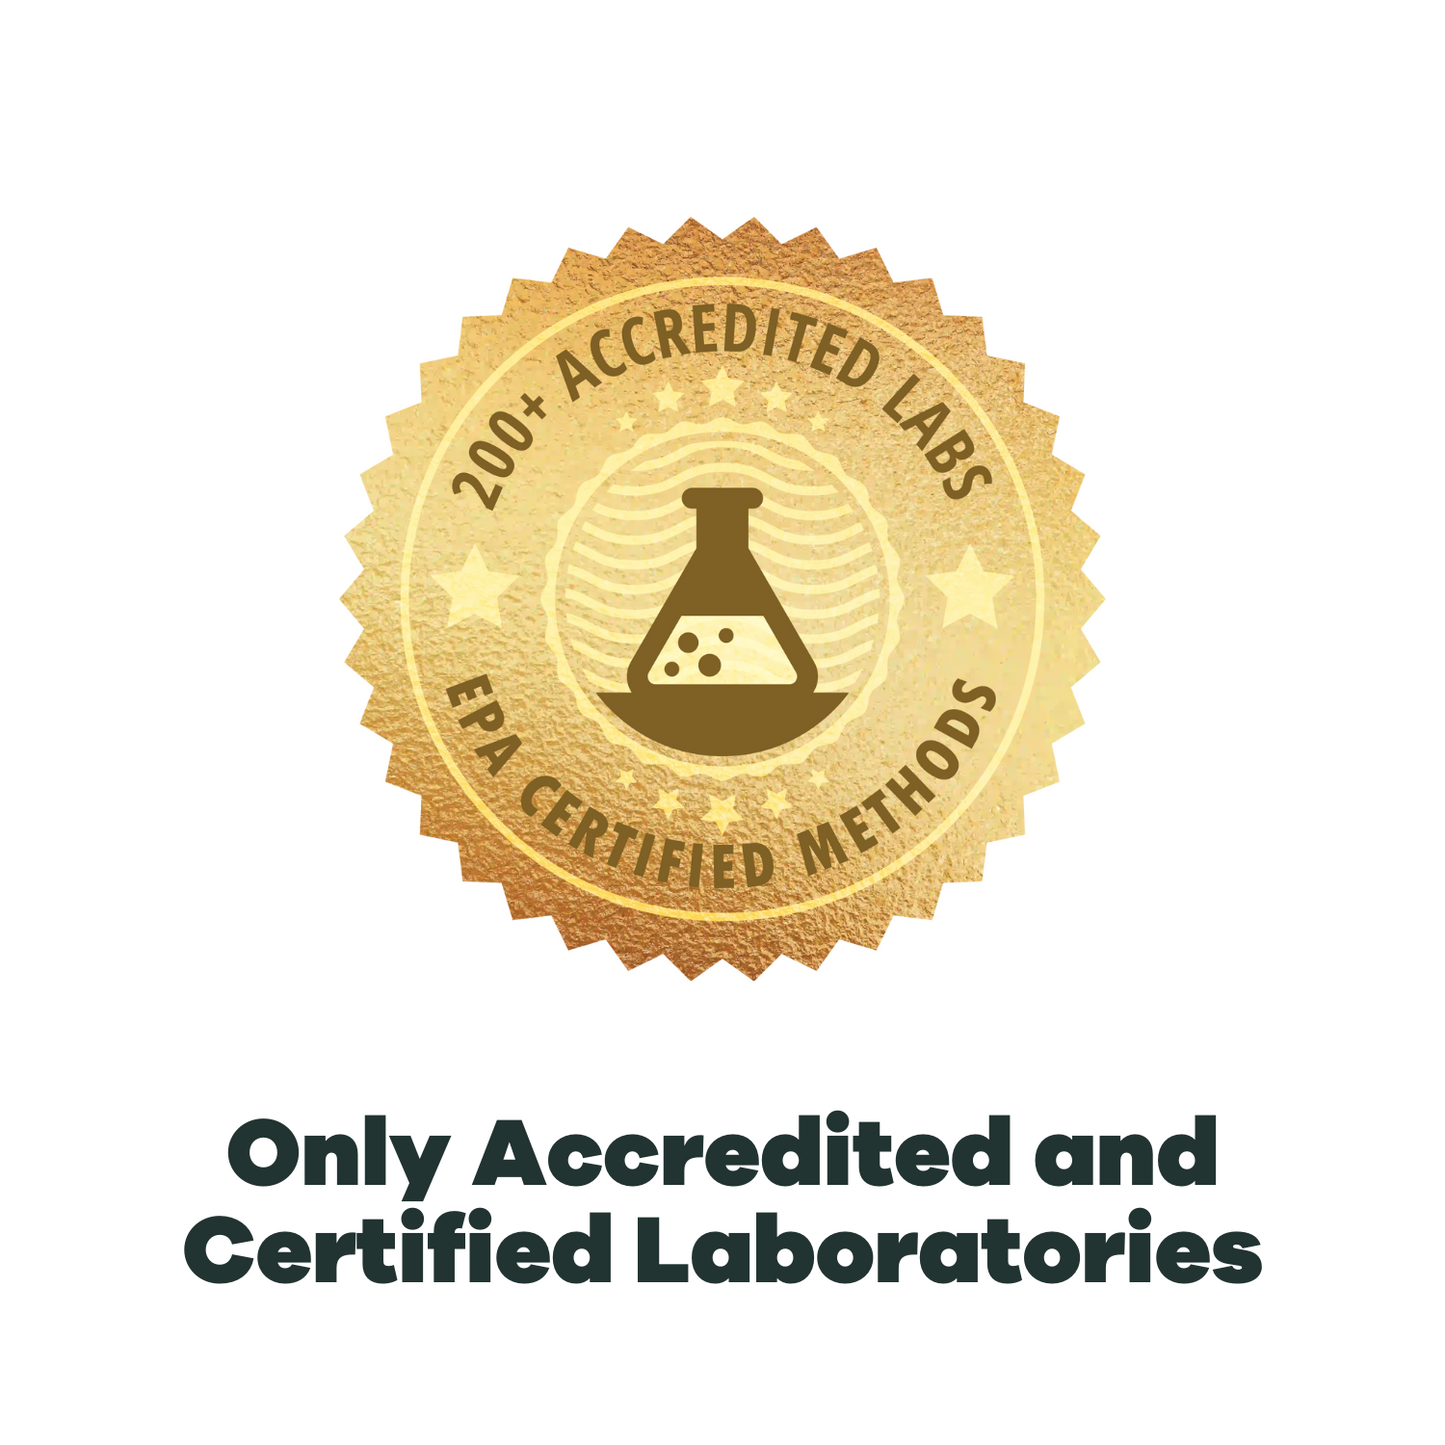 Certified laboratories